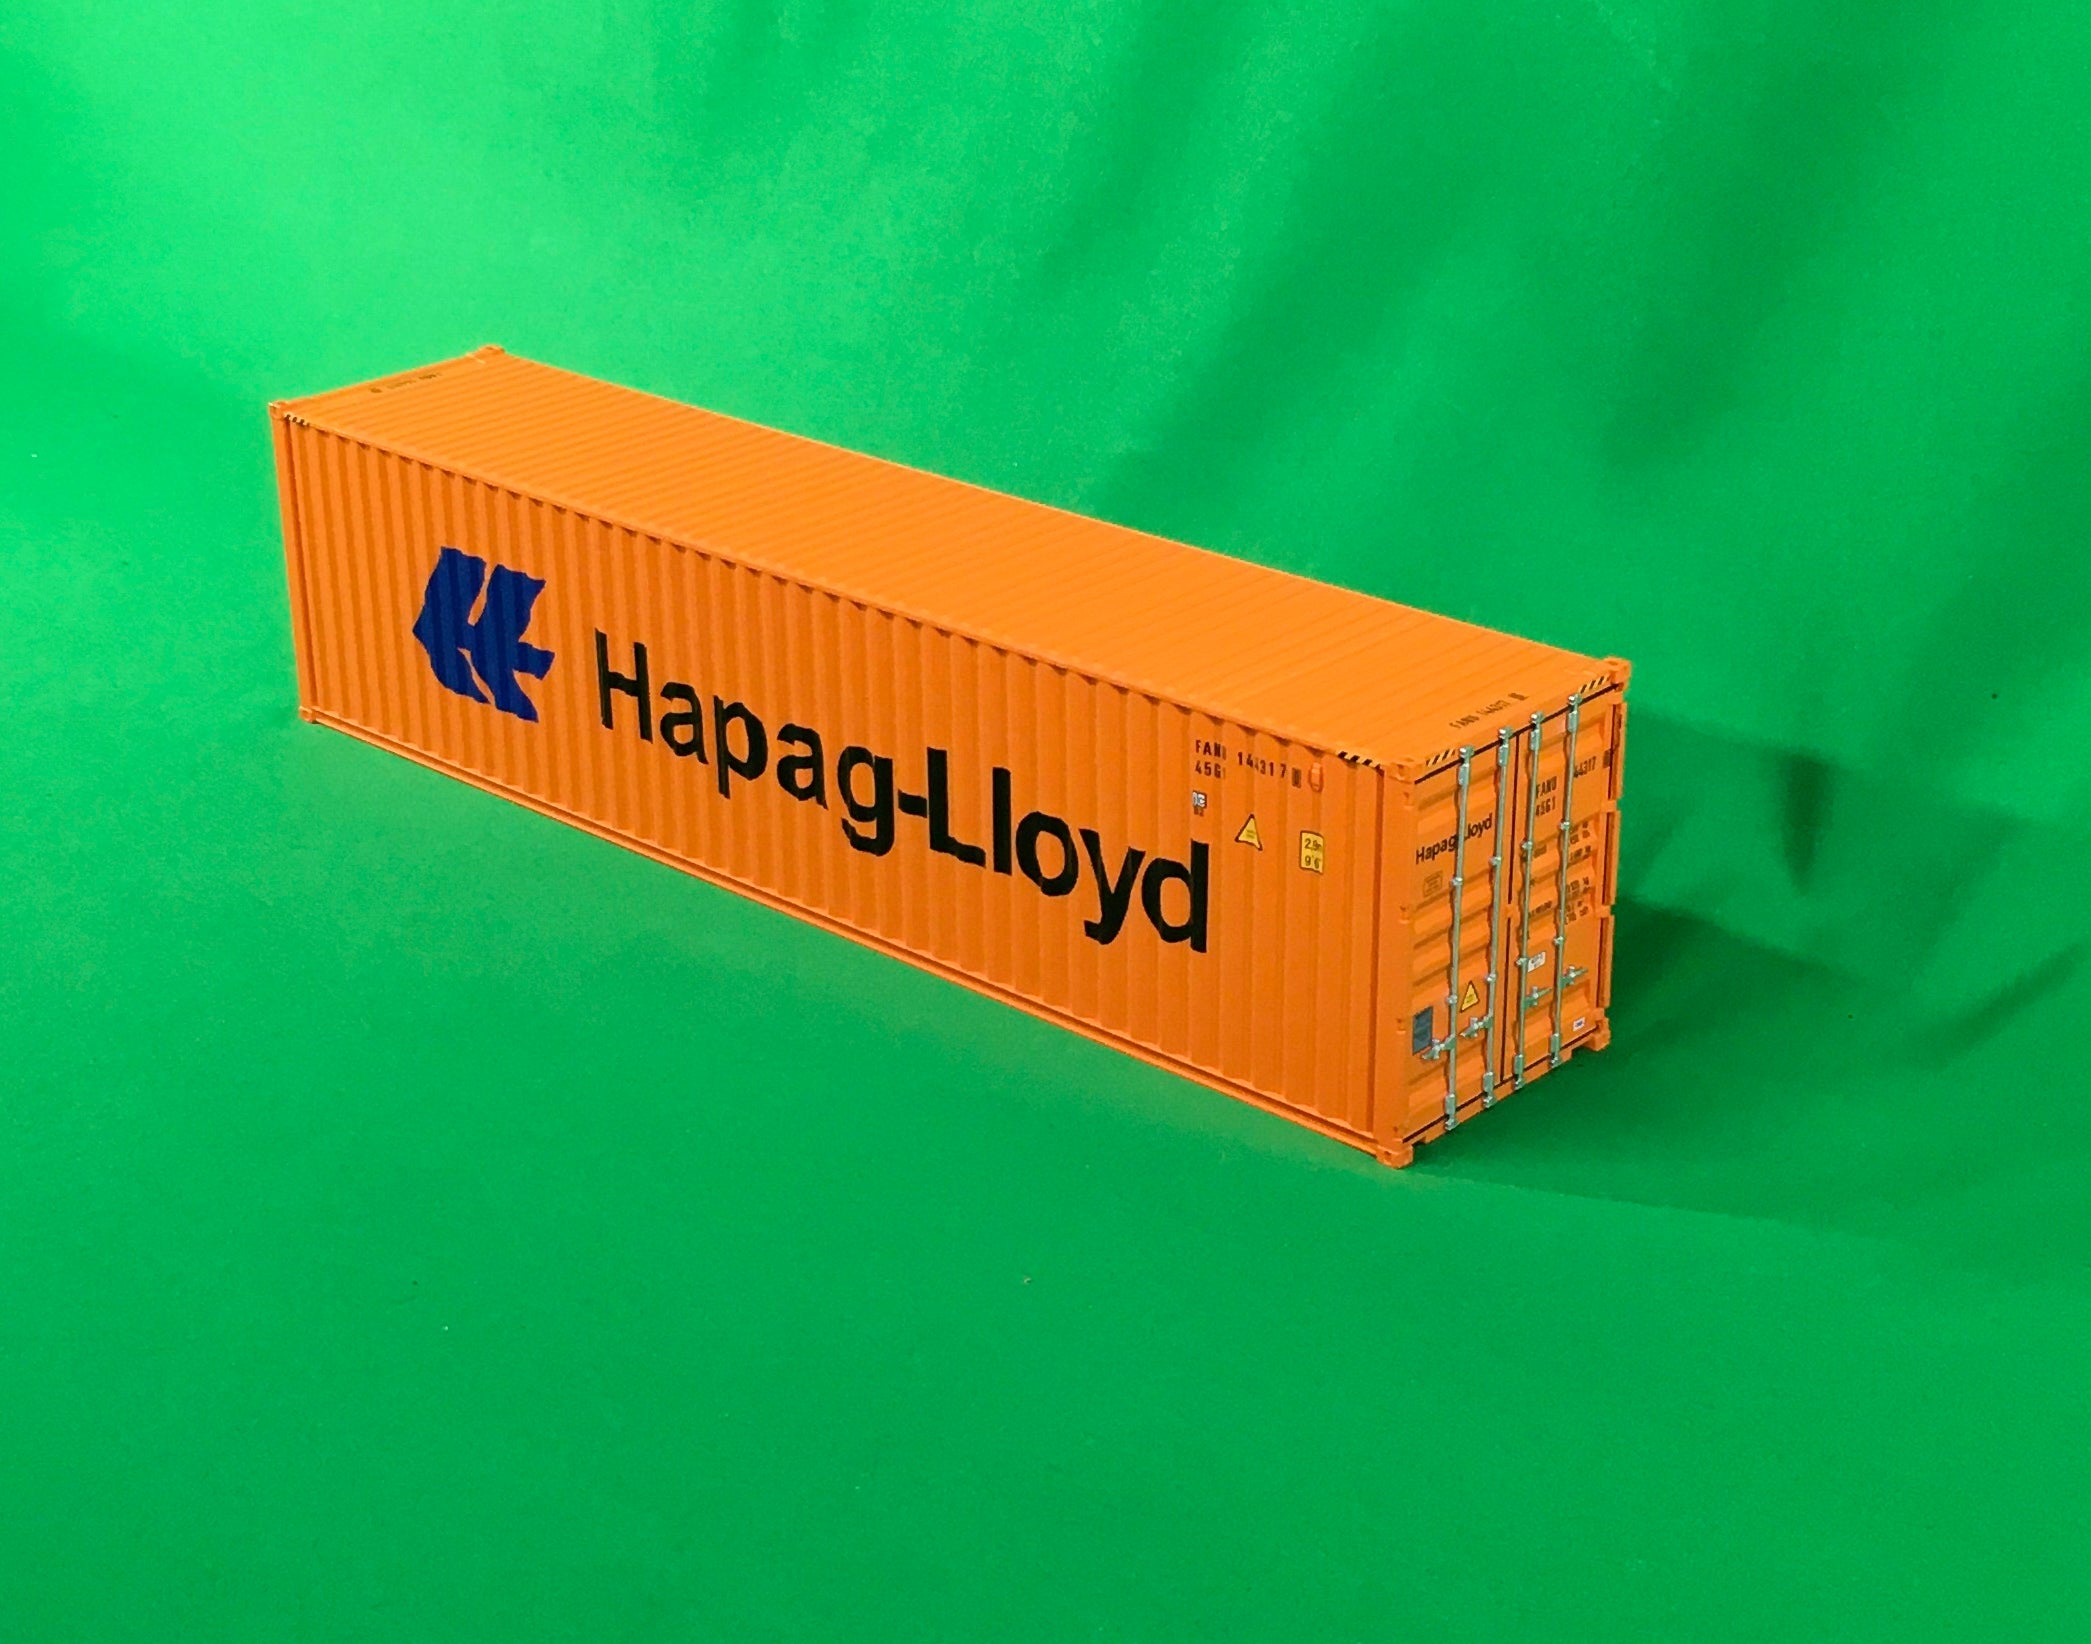 Atlas O 3001143 - Master - 40' High Cube Container "Hapag Lloyd"